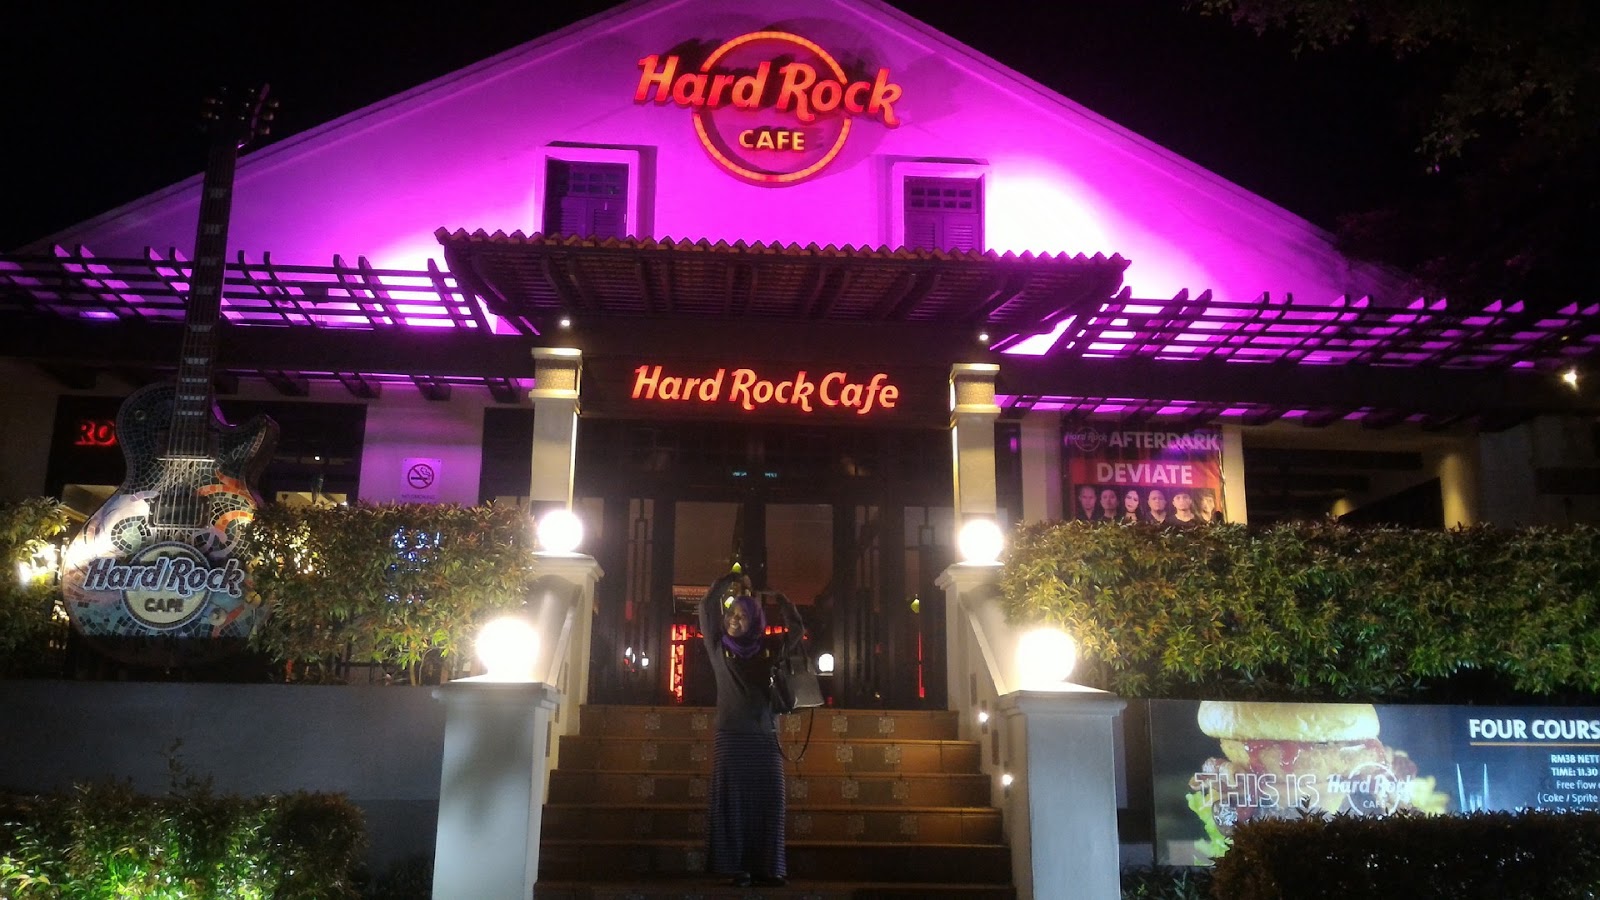 si bijAksAnA bijAksini: Melaka Road Trip : Hard Rock Cafe Melaka